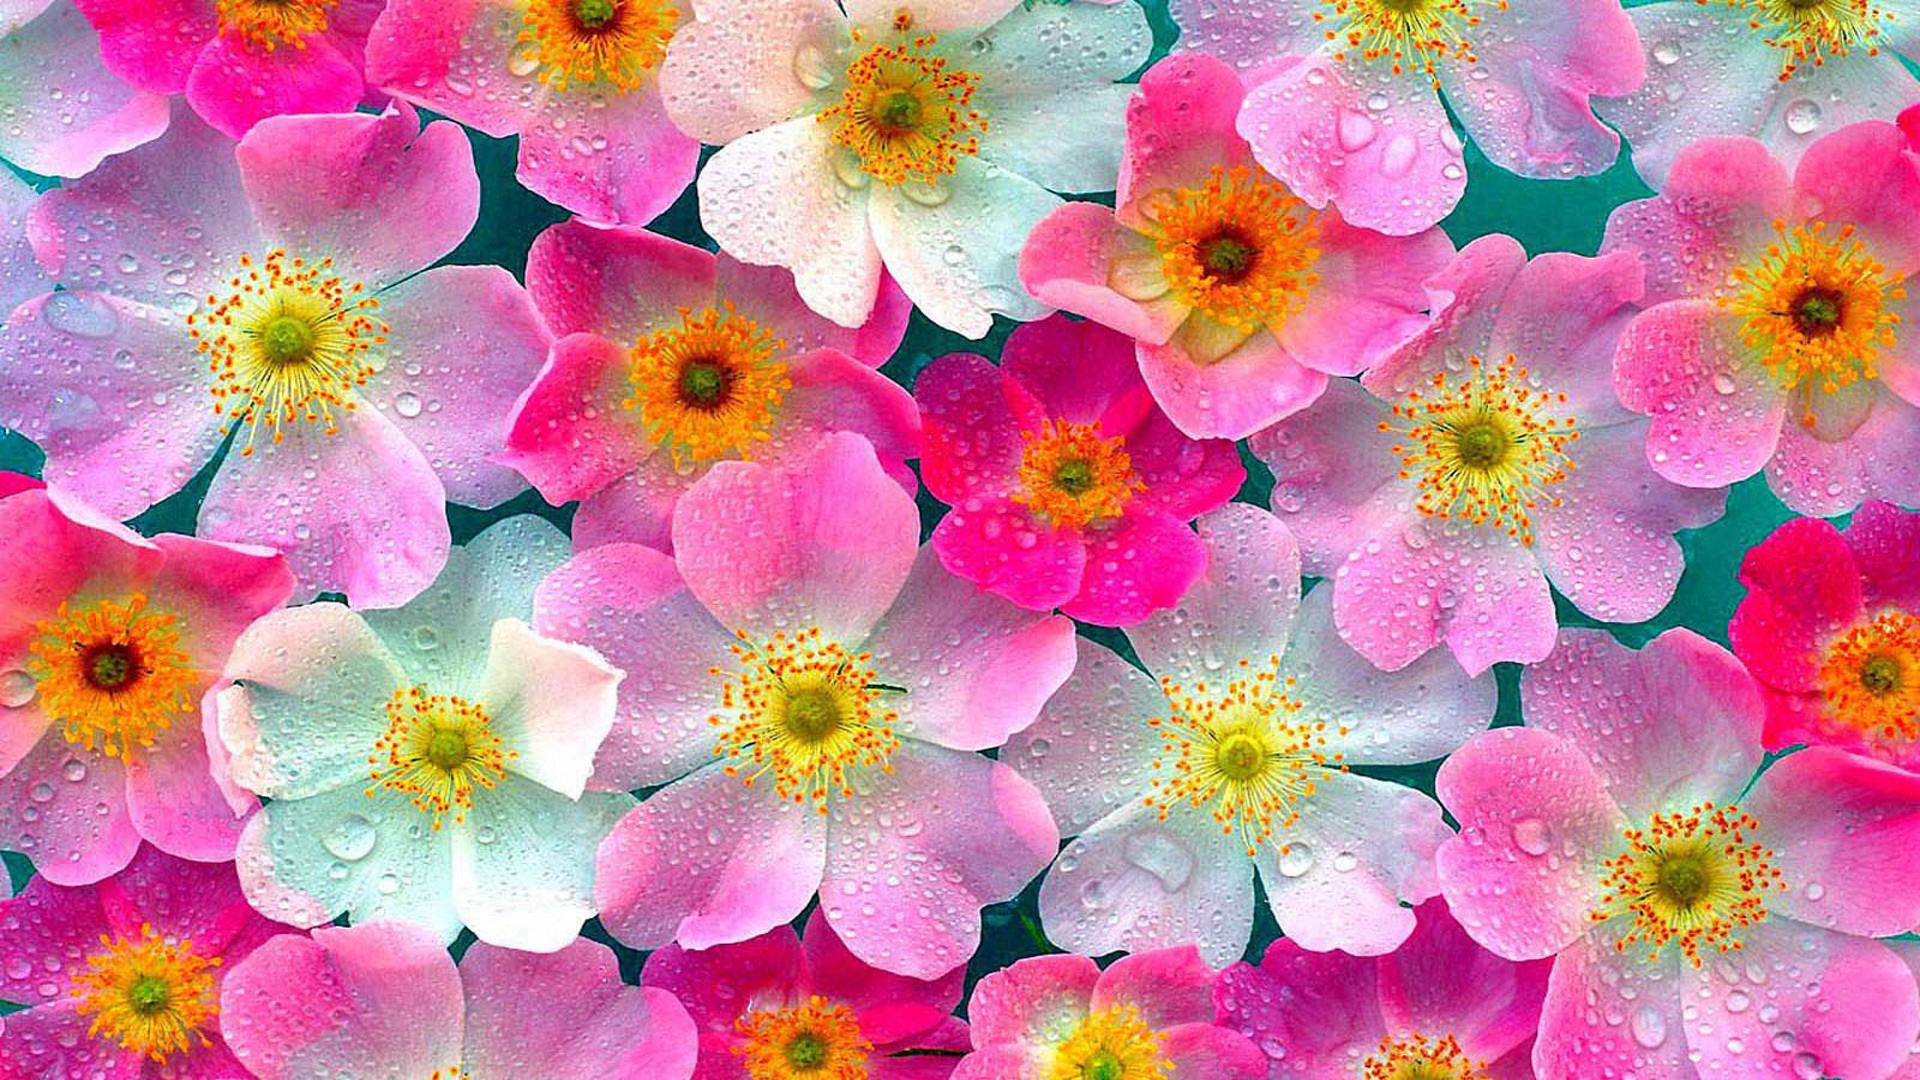 Flower Nature Flower Wallpaper Photo Download : Two bright flower